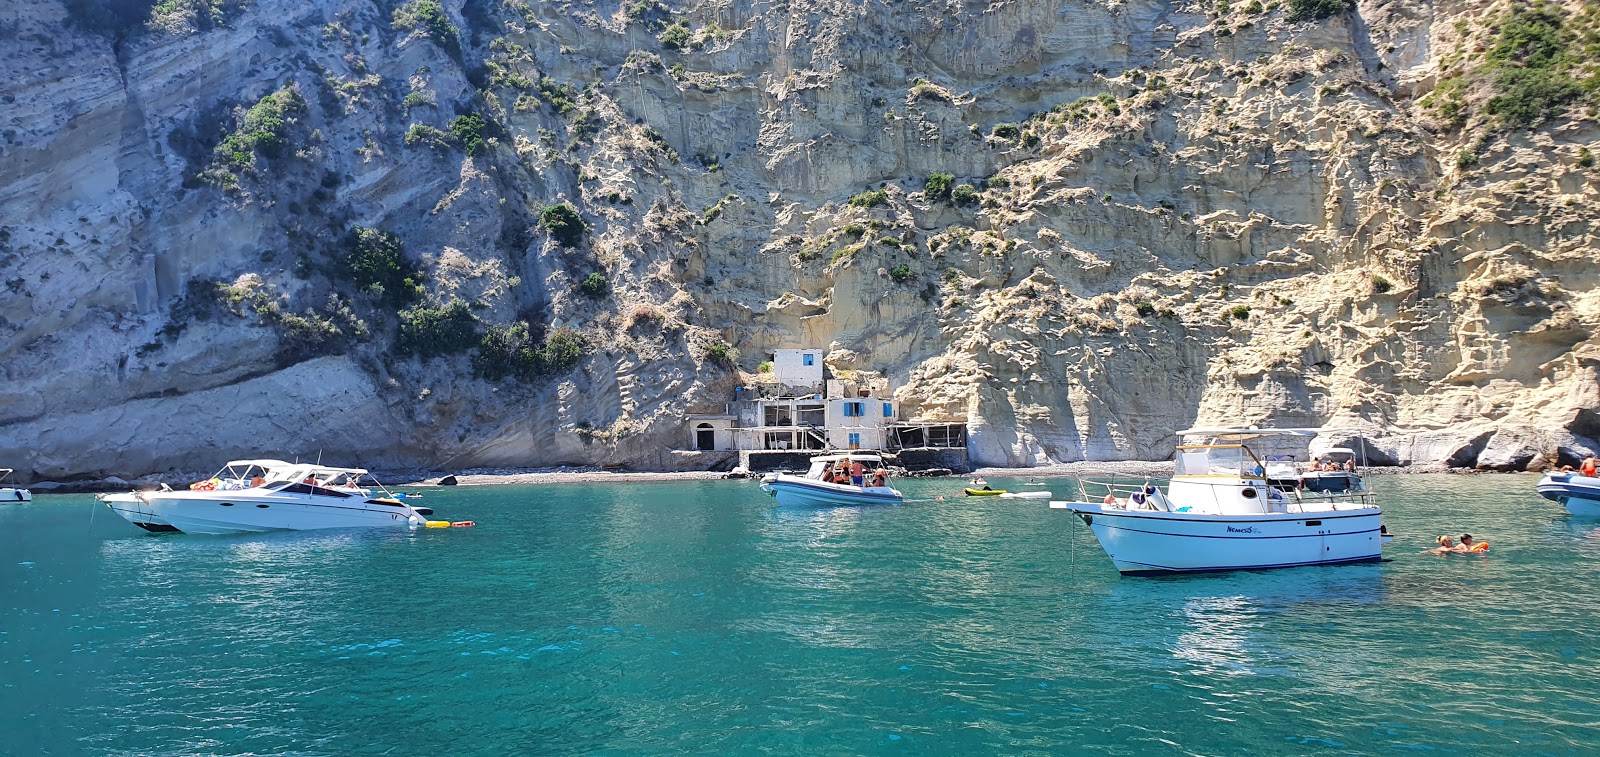 Foto av Spiaggia San Pancrazio med blå rent vatten yta